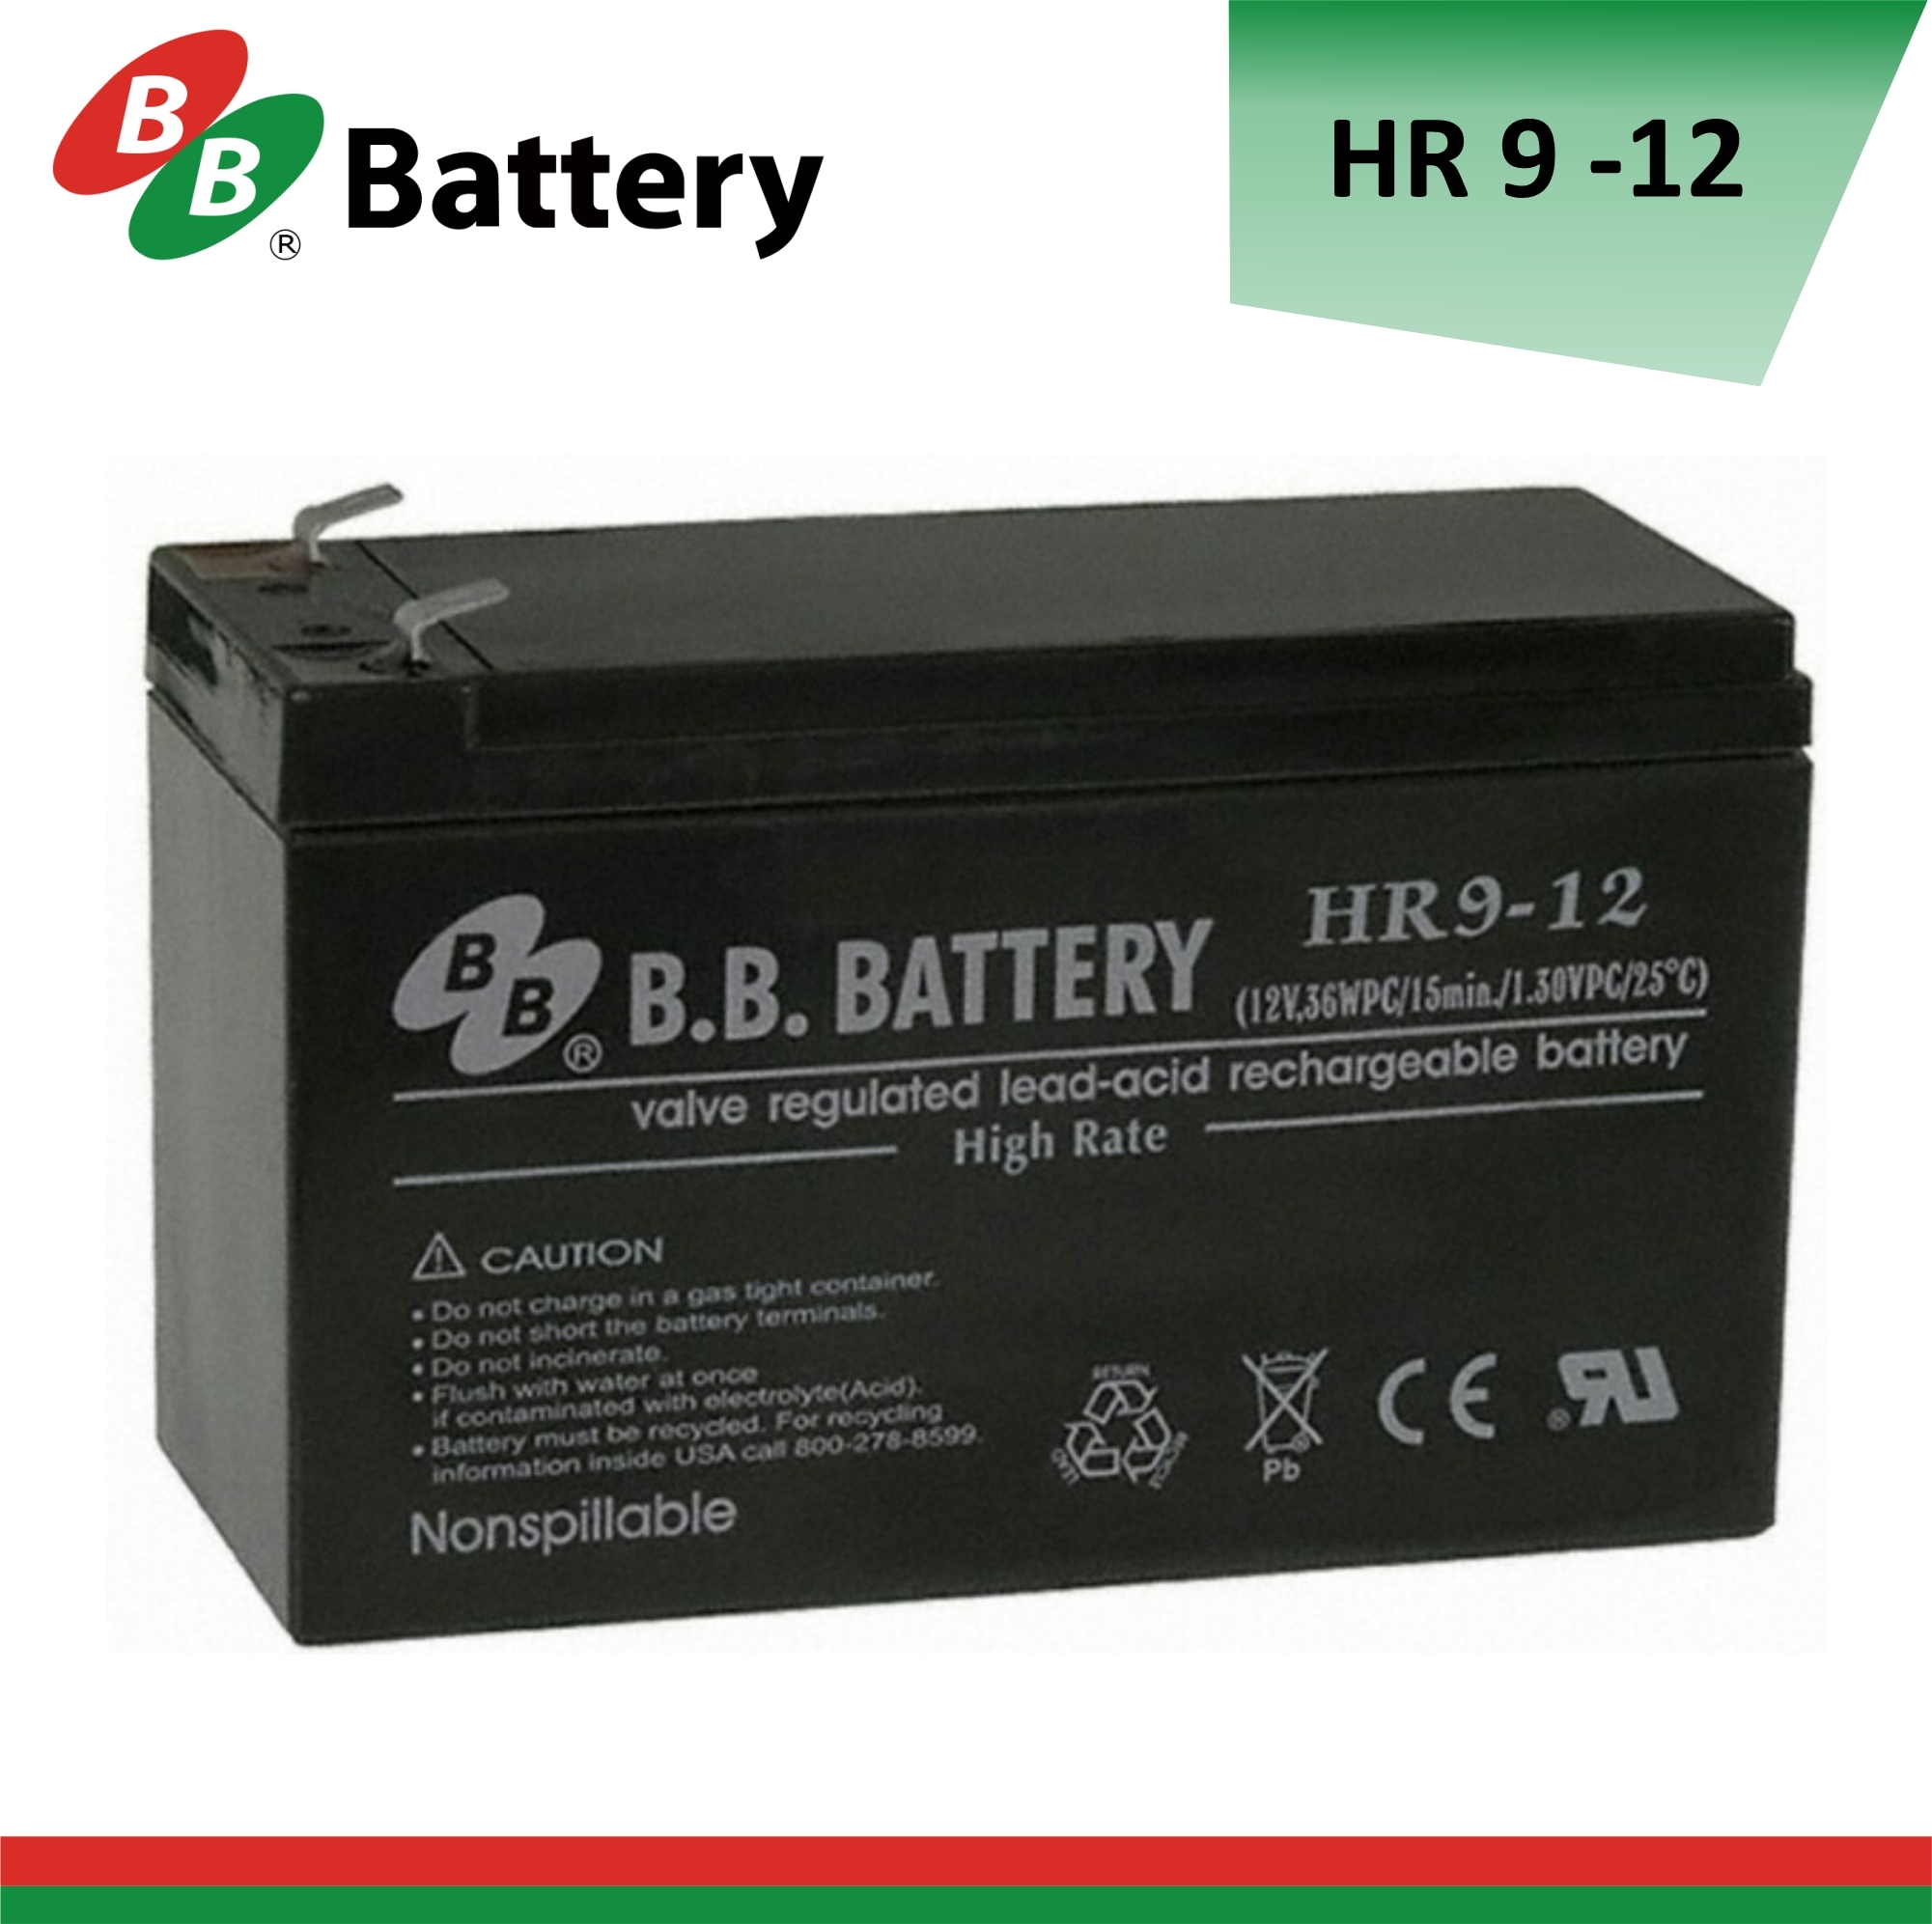 Батарея аккумуляторов с внутренним. Аккумулятор BB Battary HR 9-12. Батарея BB Battery hr9-12. Батарея аккумуляторная HR 9-12 B.B. Battery. Батарея b.b. Battery hr9-6.